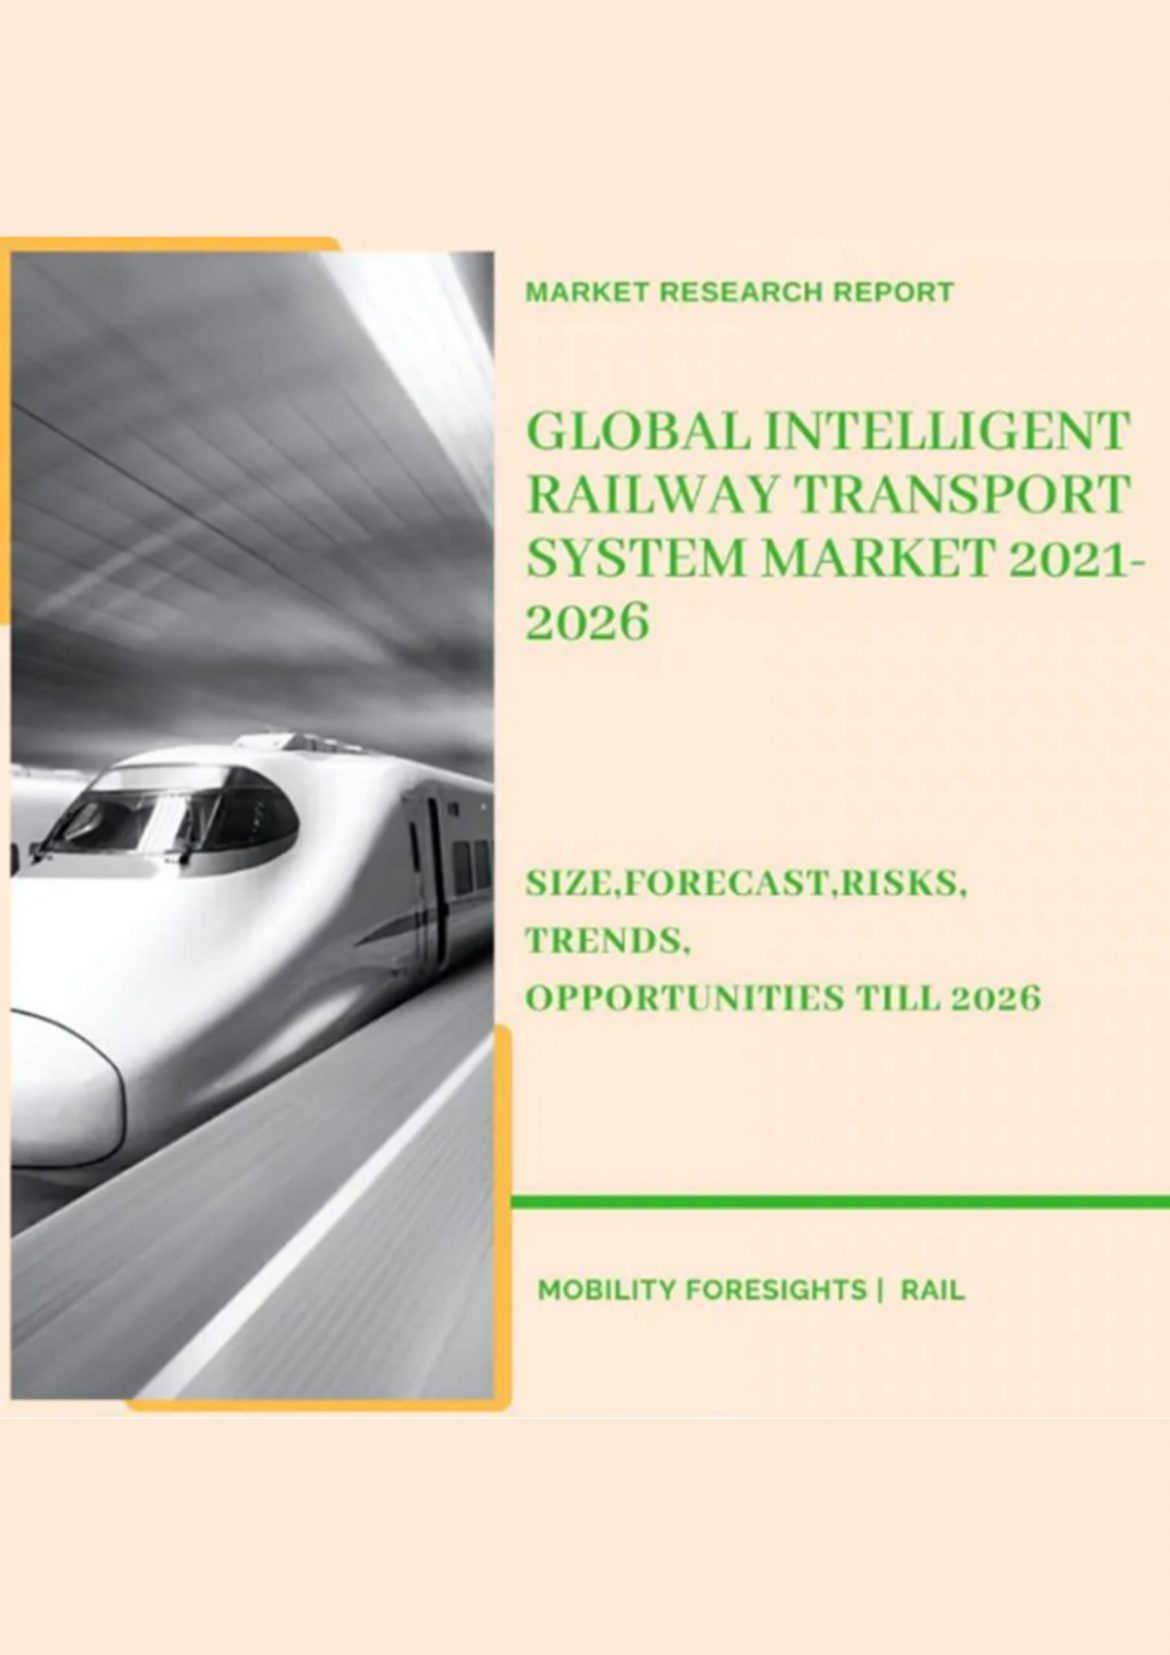 Global Intelligent Railway Transport System Market 2021-2026